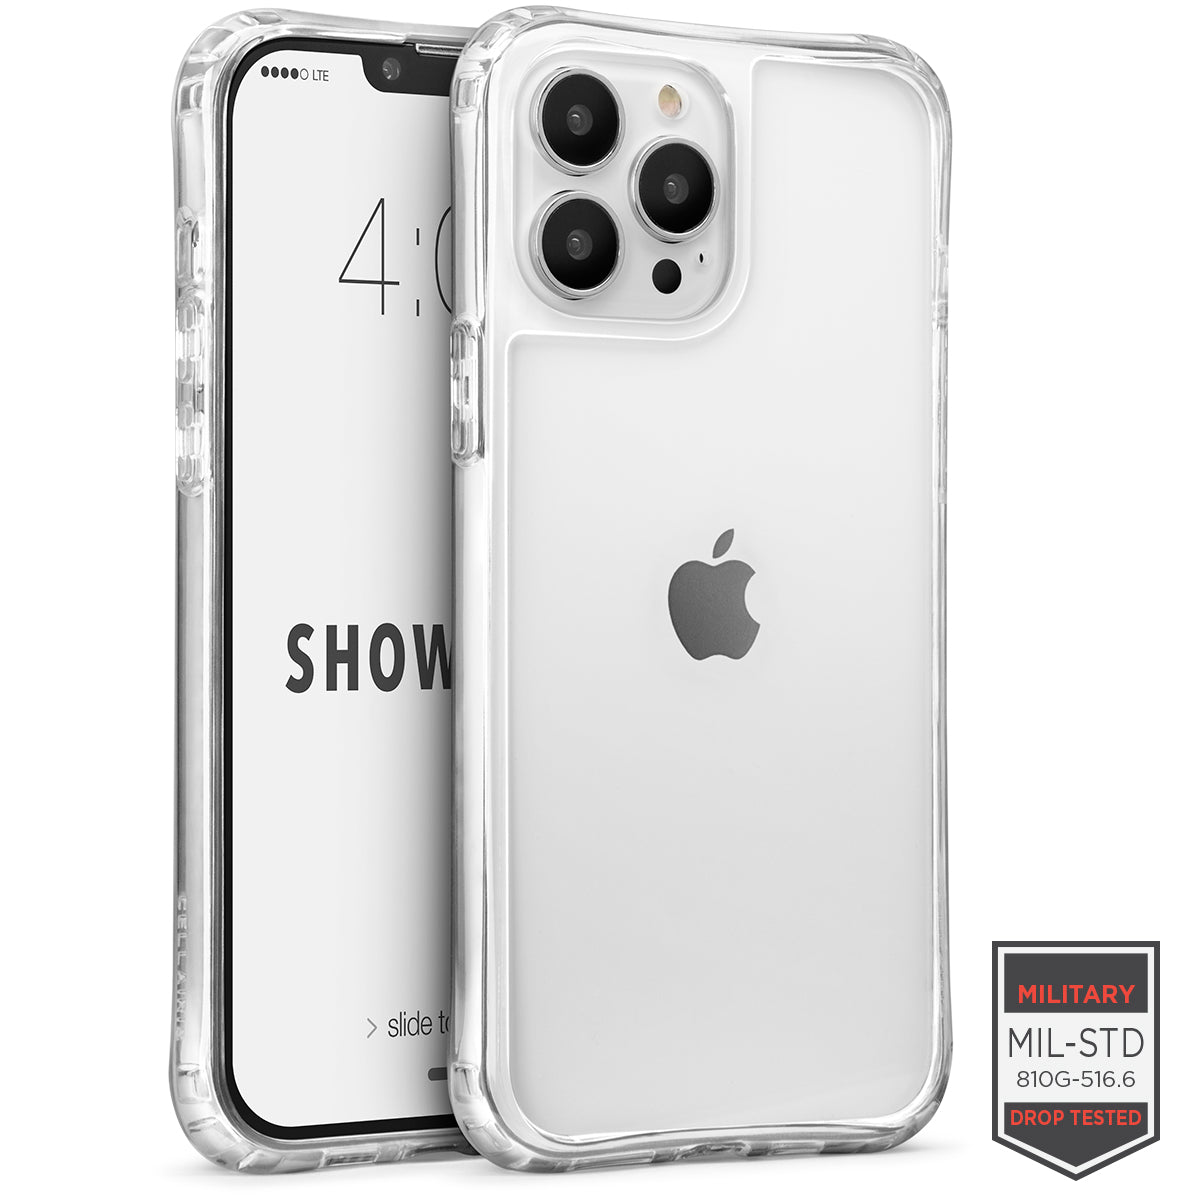 Showcase iPhone Pro Max